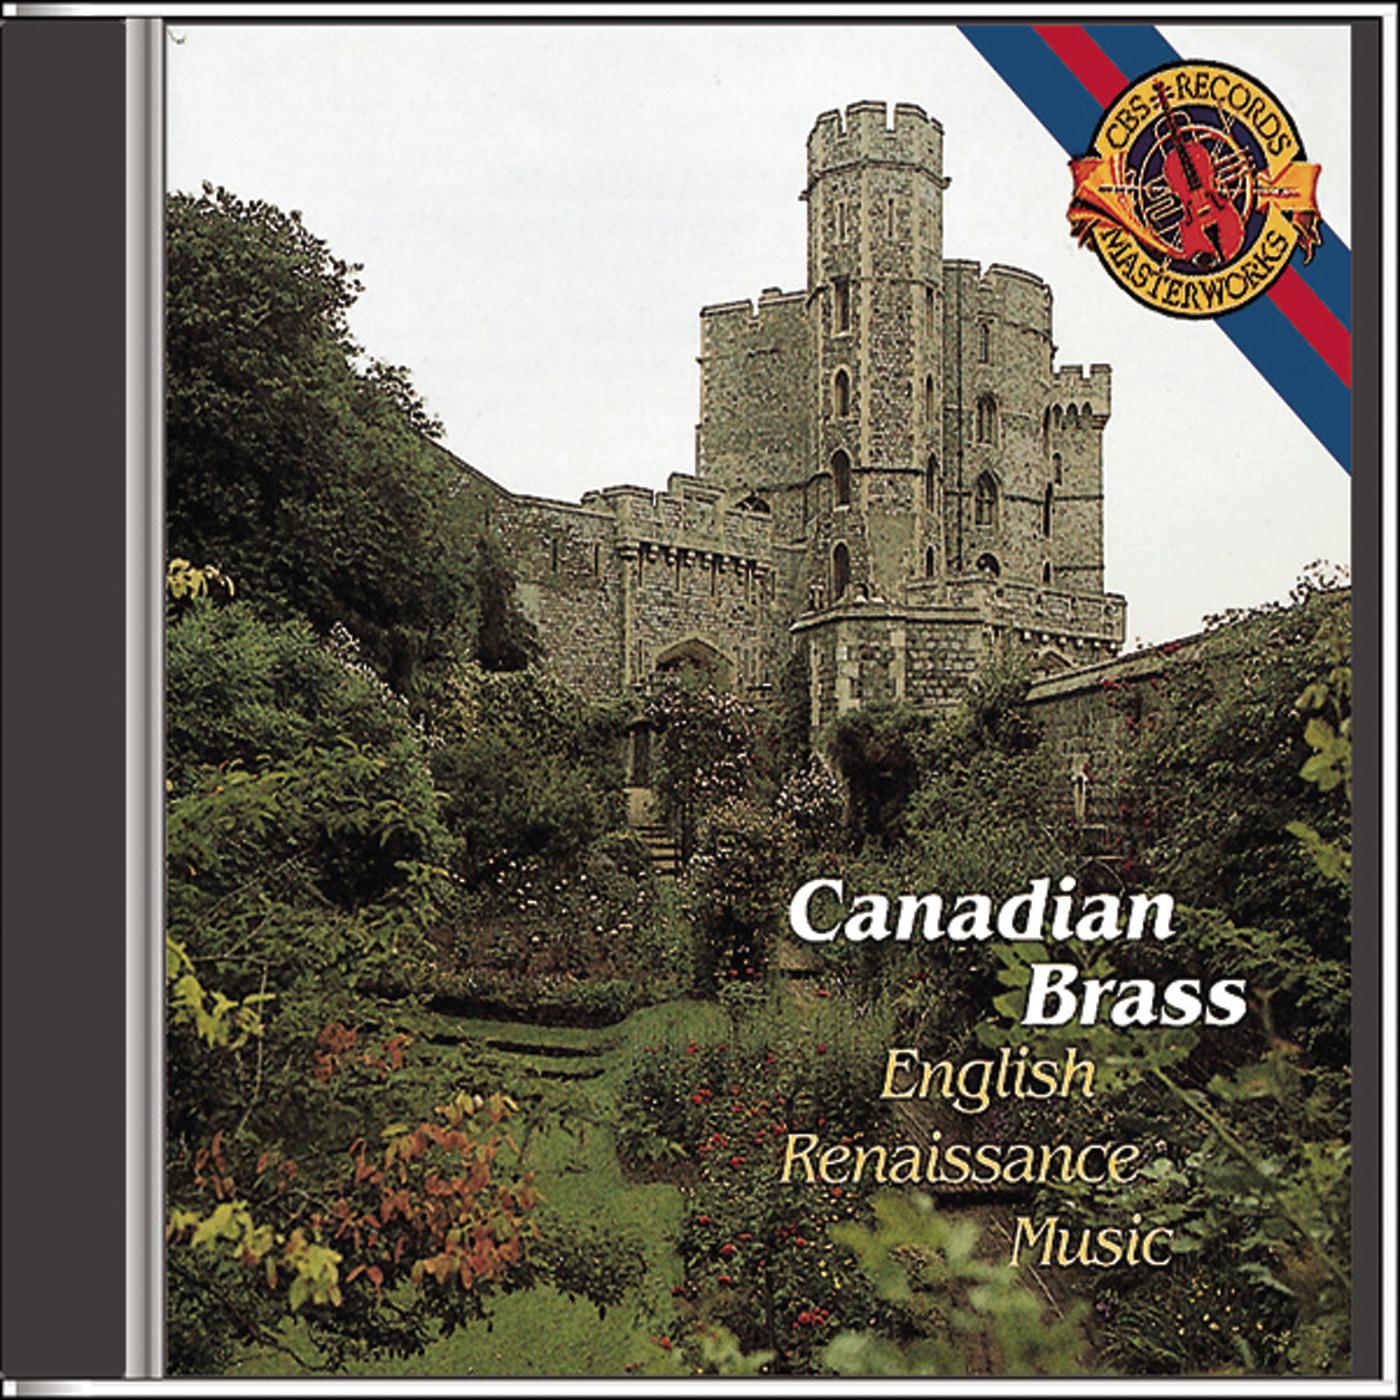 The Canadian Brass - My Bonny Lass (Instrumental)